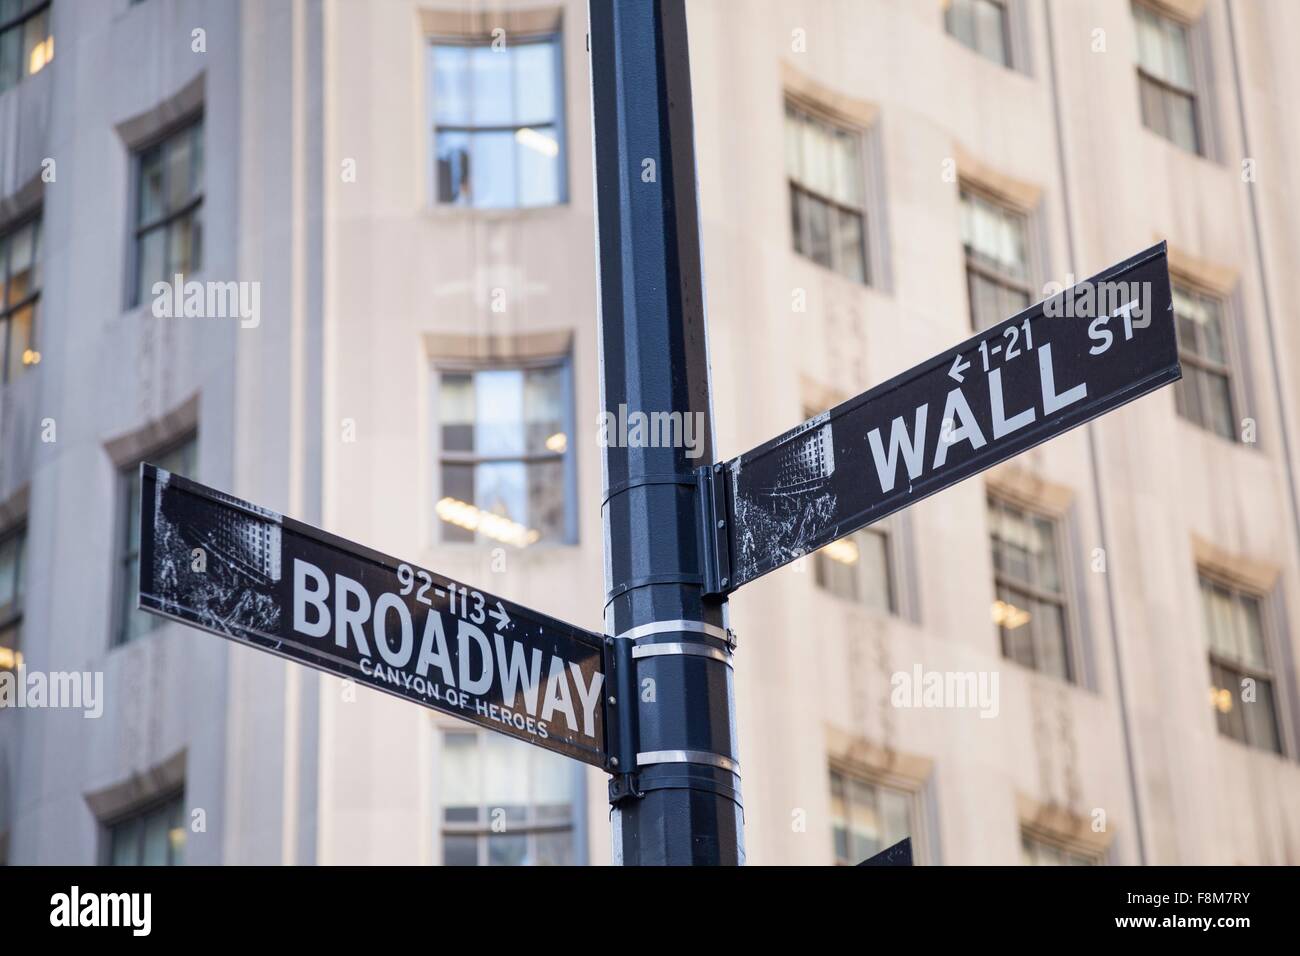 Broadway und Wall Street, Straßenschild, New York, USA Stockfoto